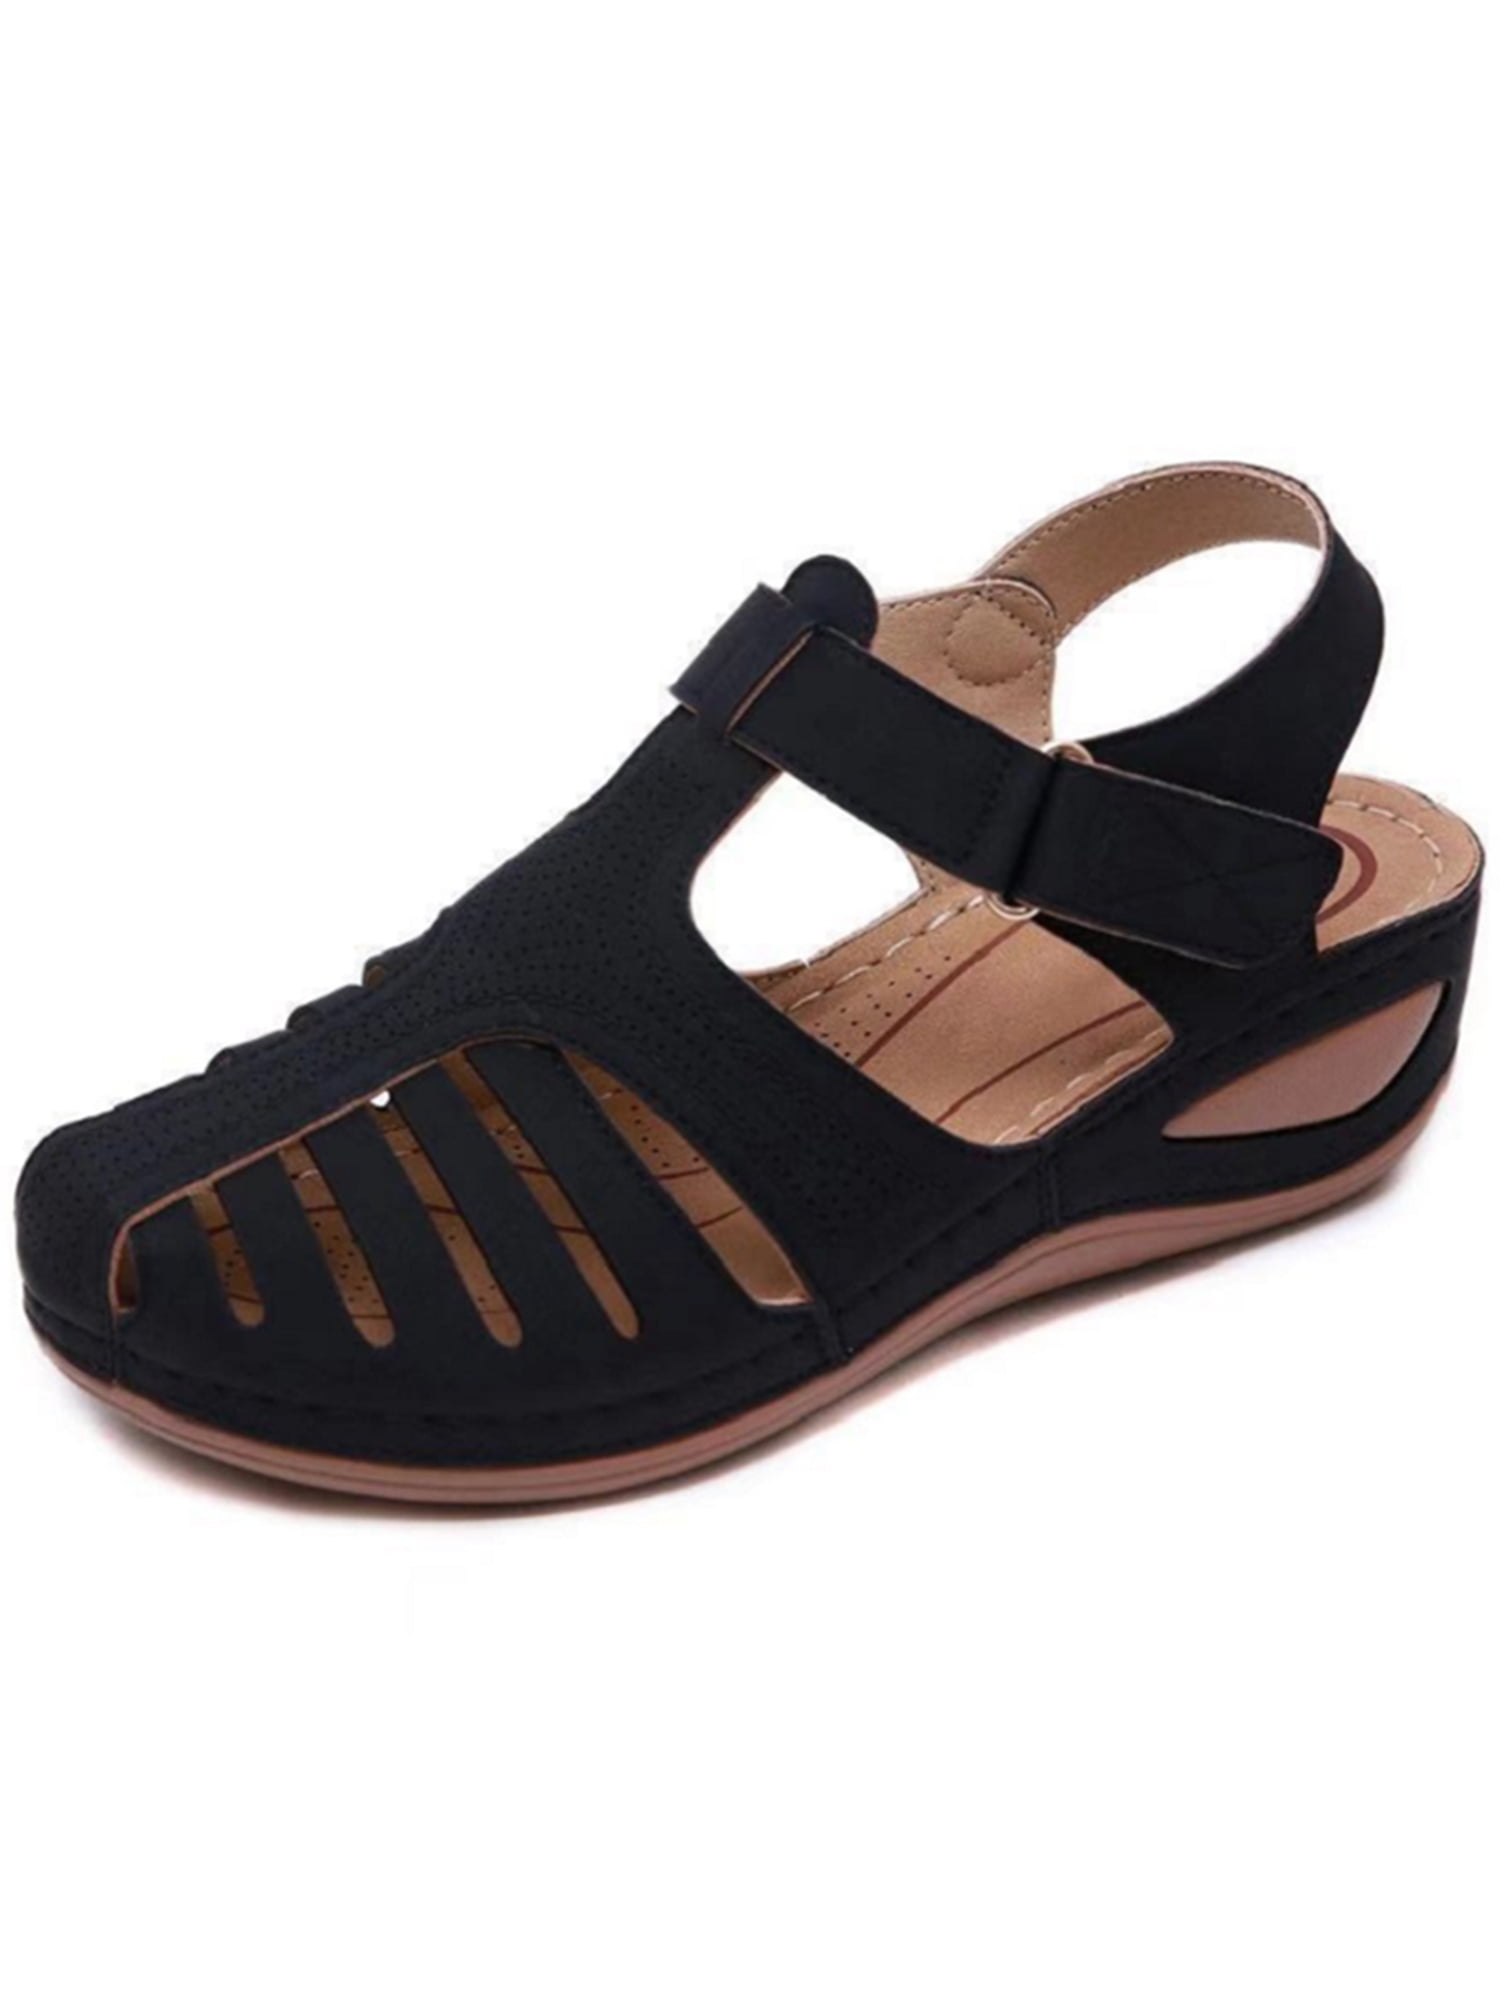 Womens Sandal T-strap Summer Shoes Wedge Heel Platform Peep Toe Strappy Size5-10